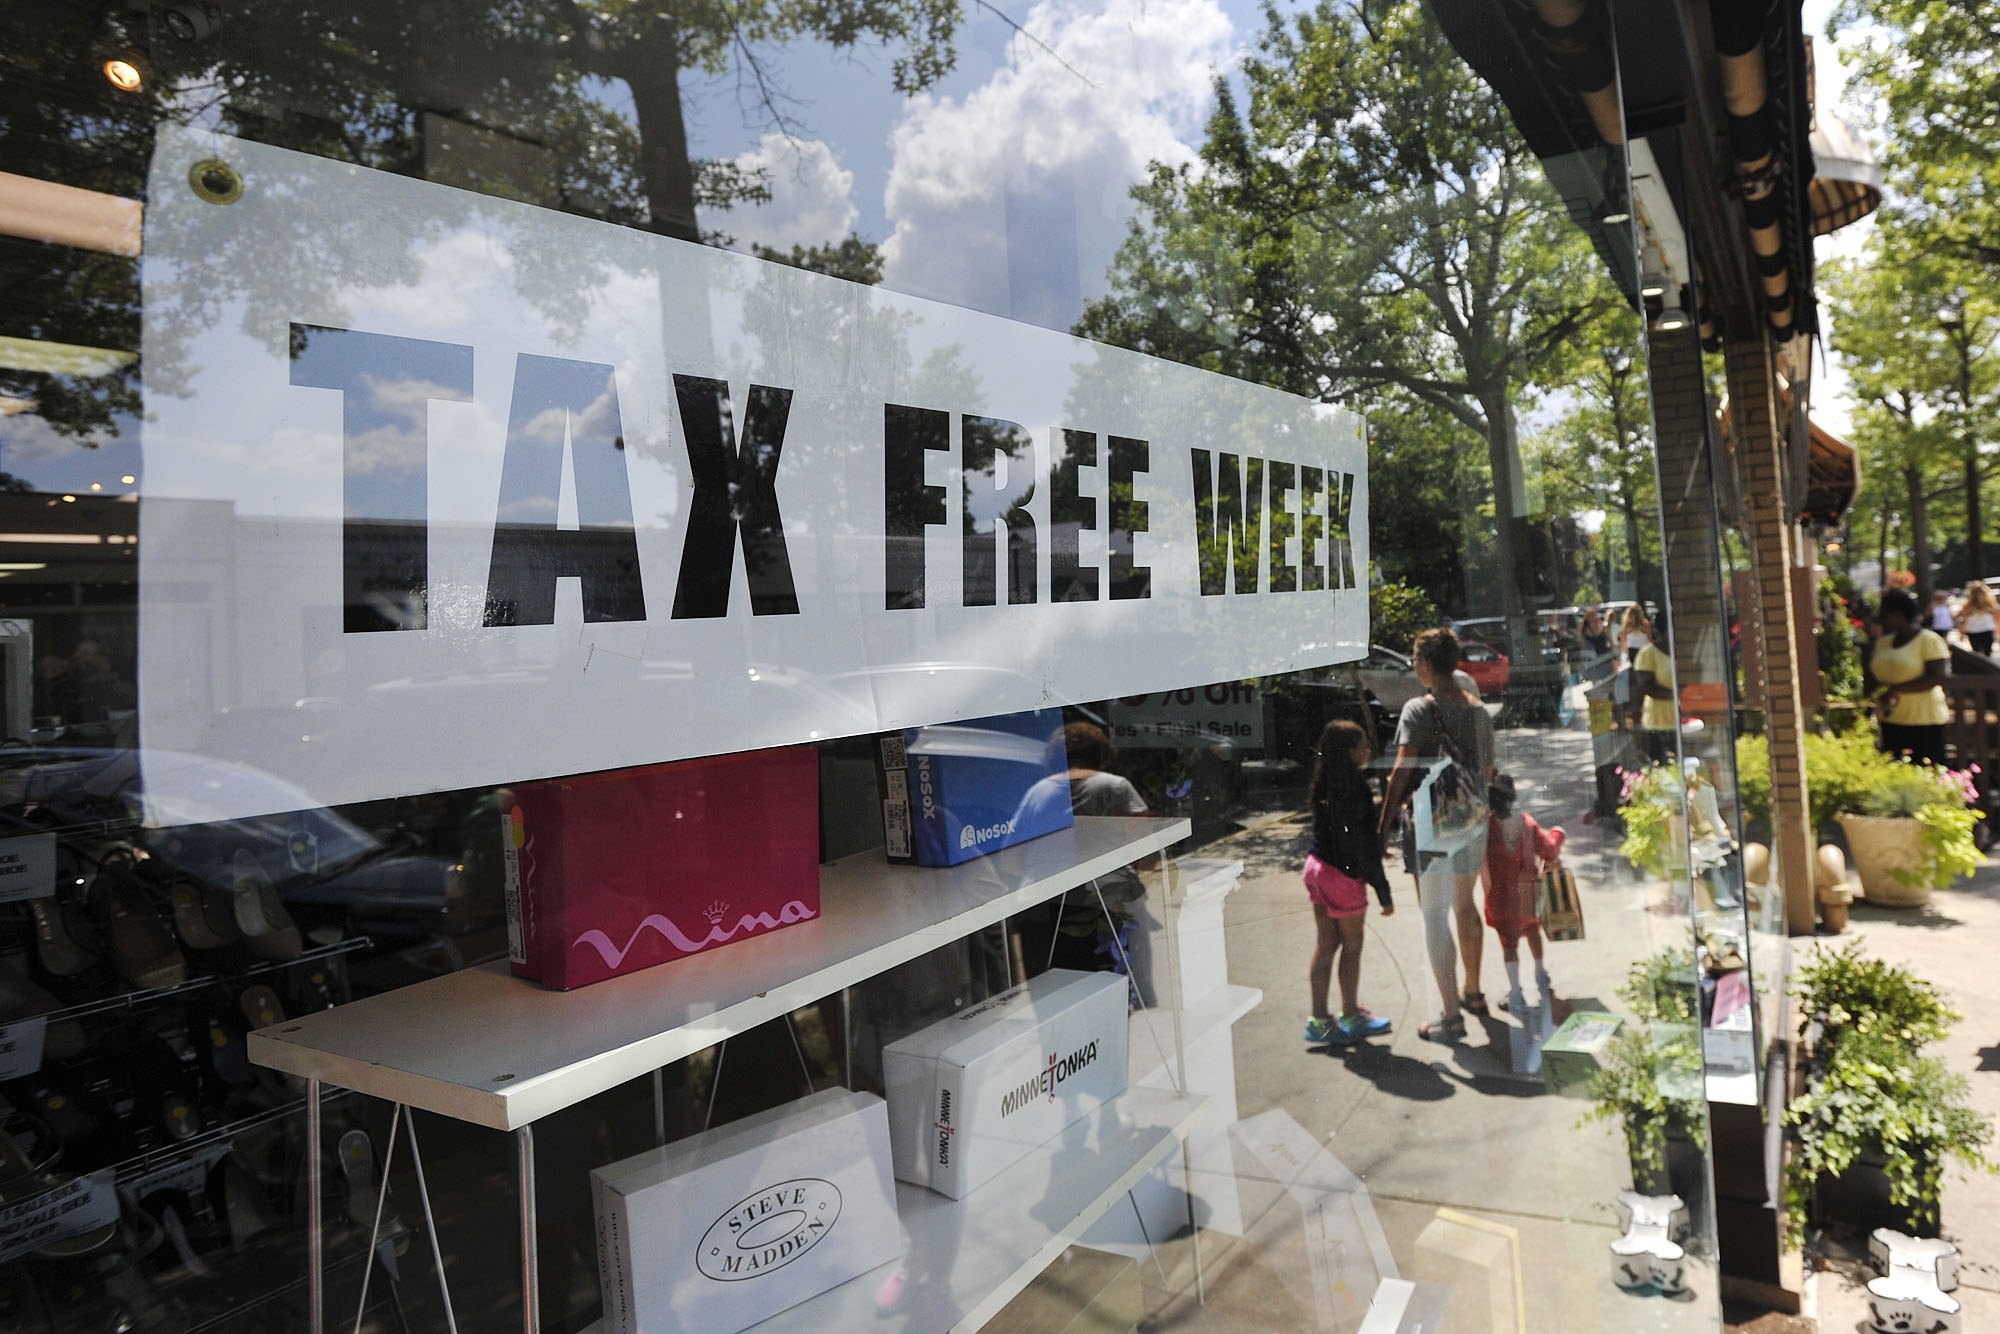 Connecticut’s tax free week is underway, Aug. 1521